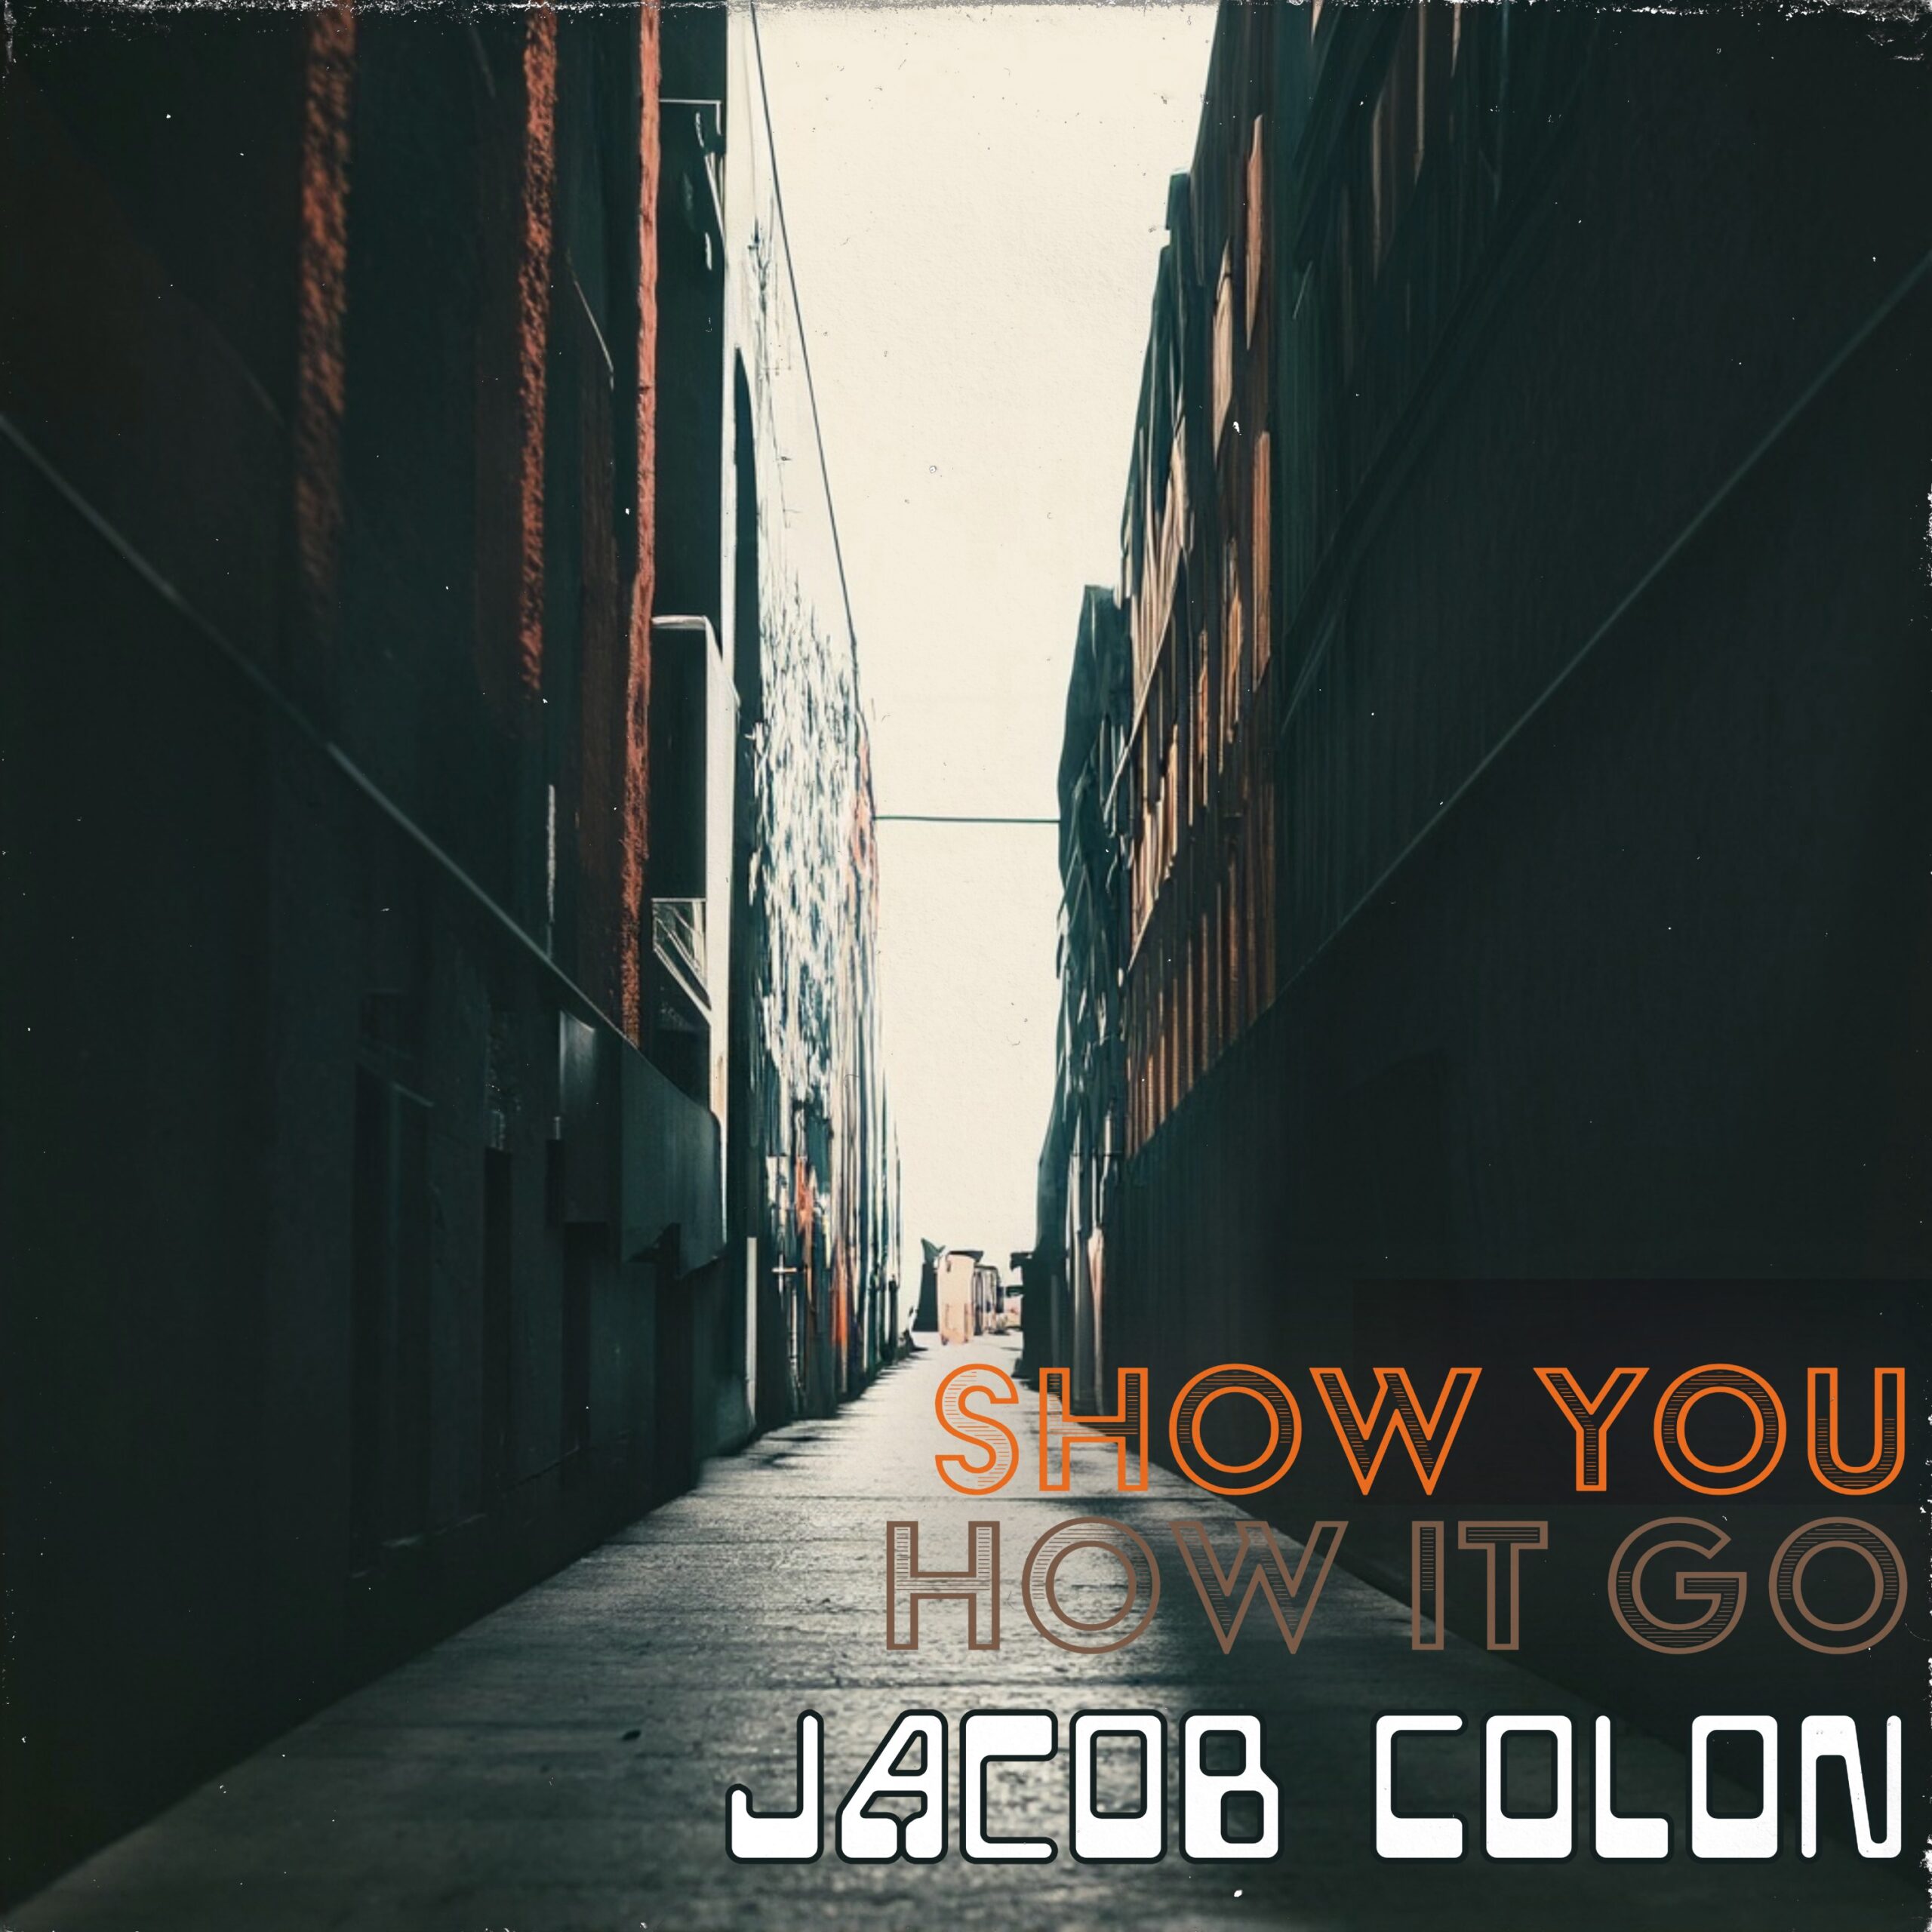 Jacob Colon's Latest Track "Show You How It Go" is a Tech House Gem